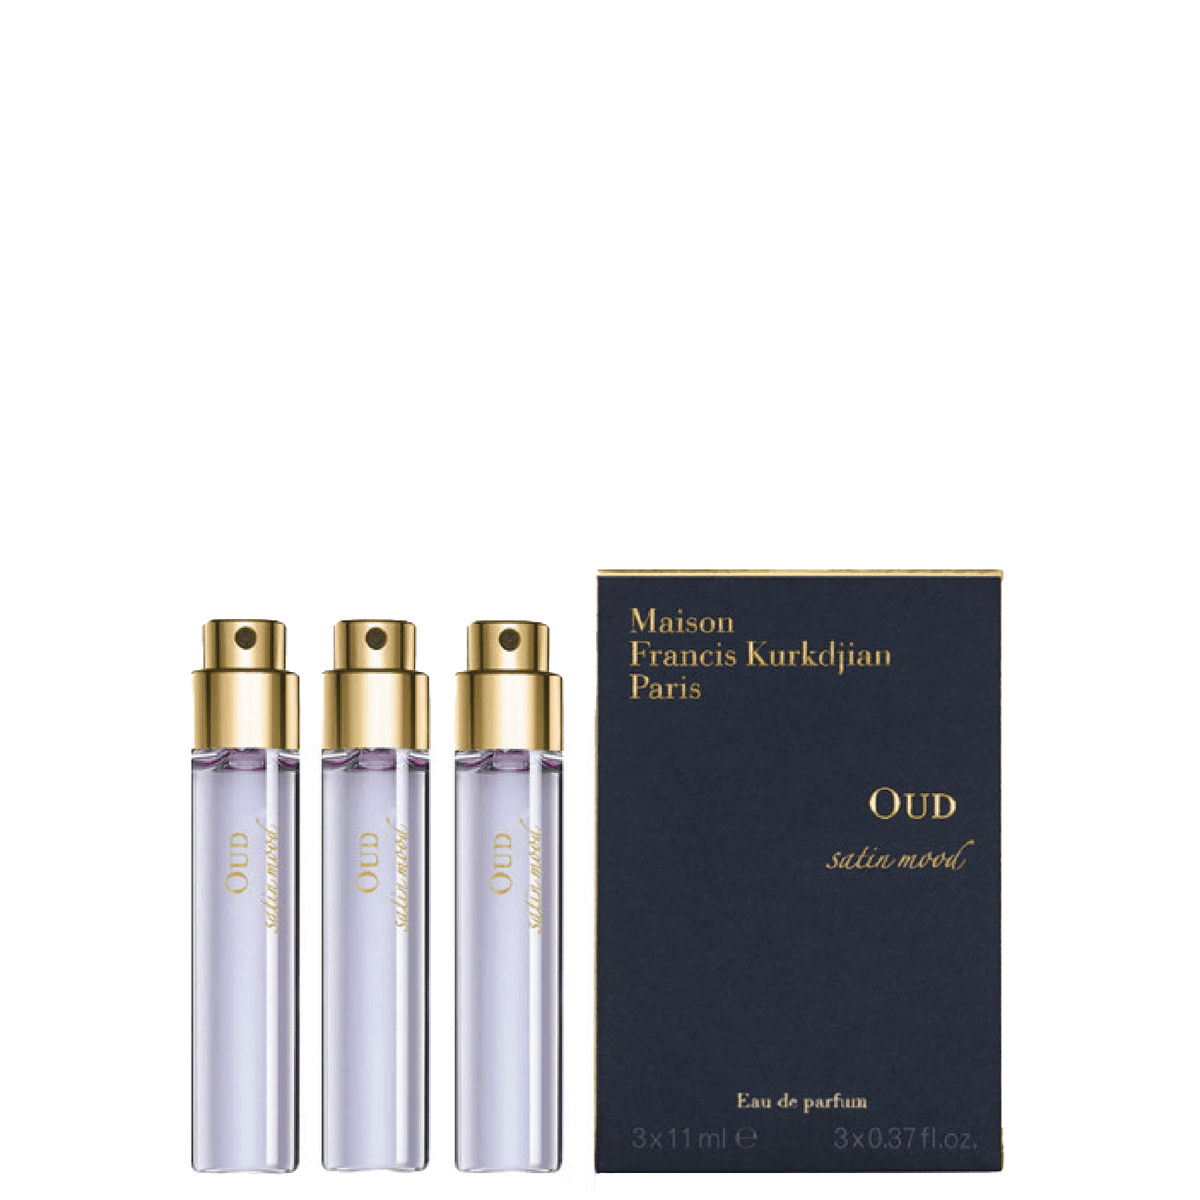 Maison Francis Kurkdjian Oud Perfume by Maison Francis Kurkdjian